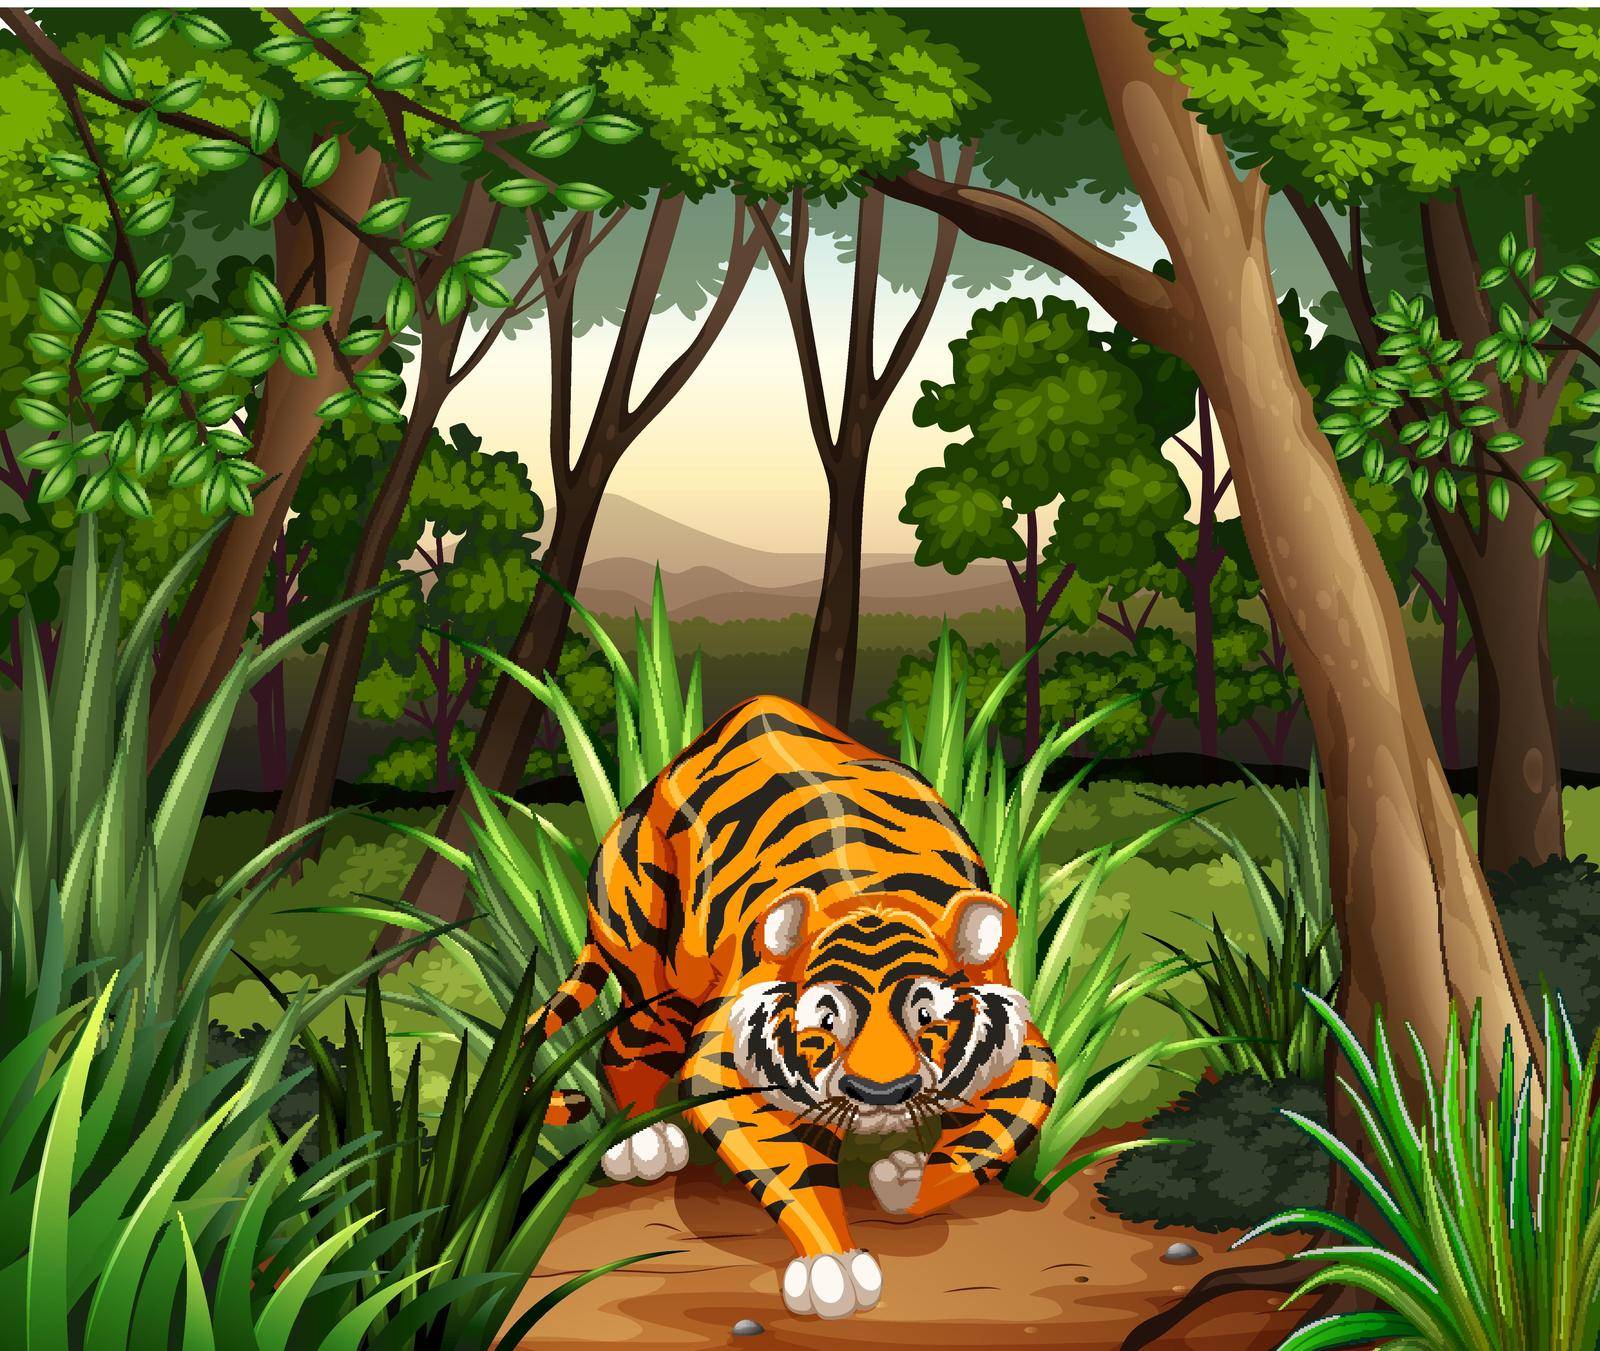 Tiger walking in a jungle